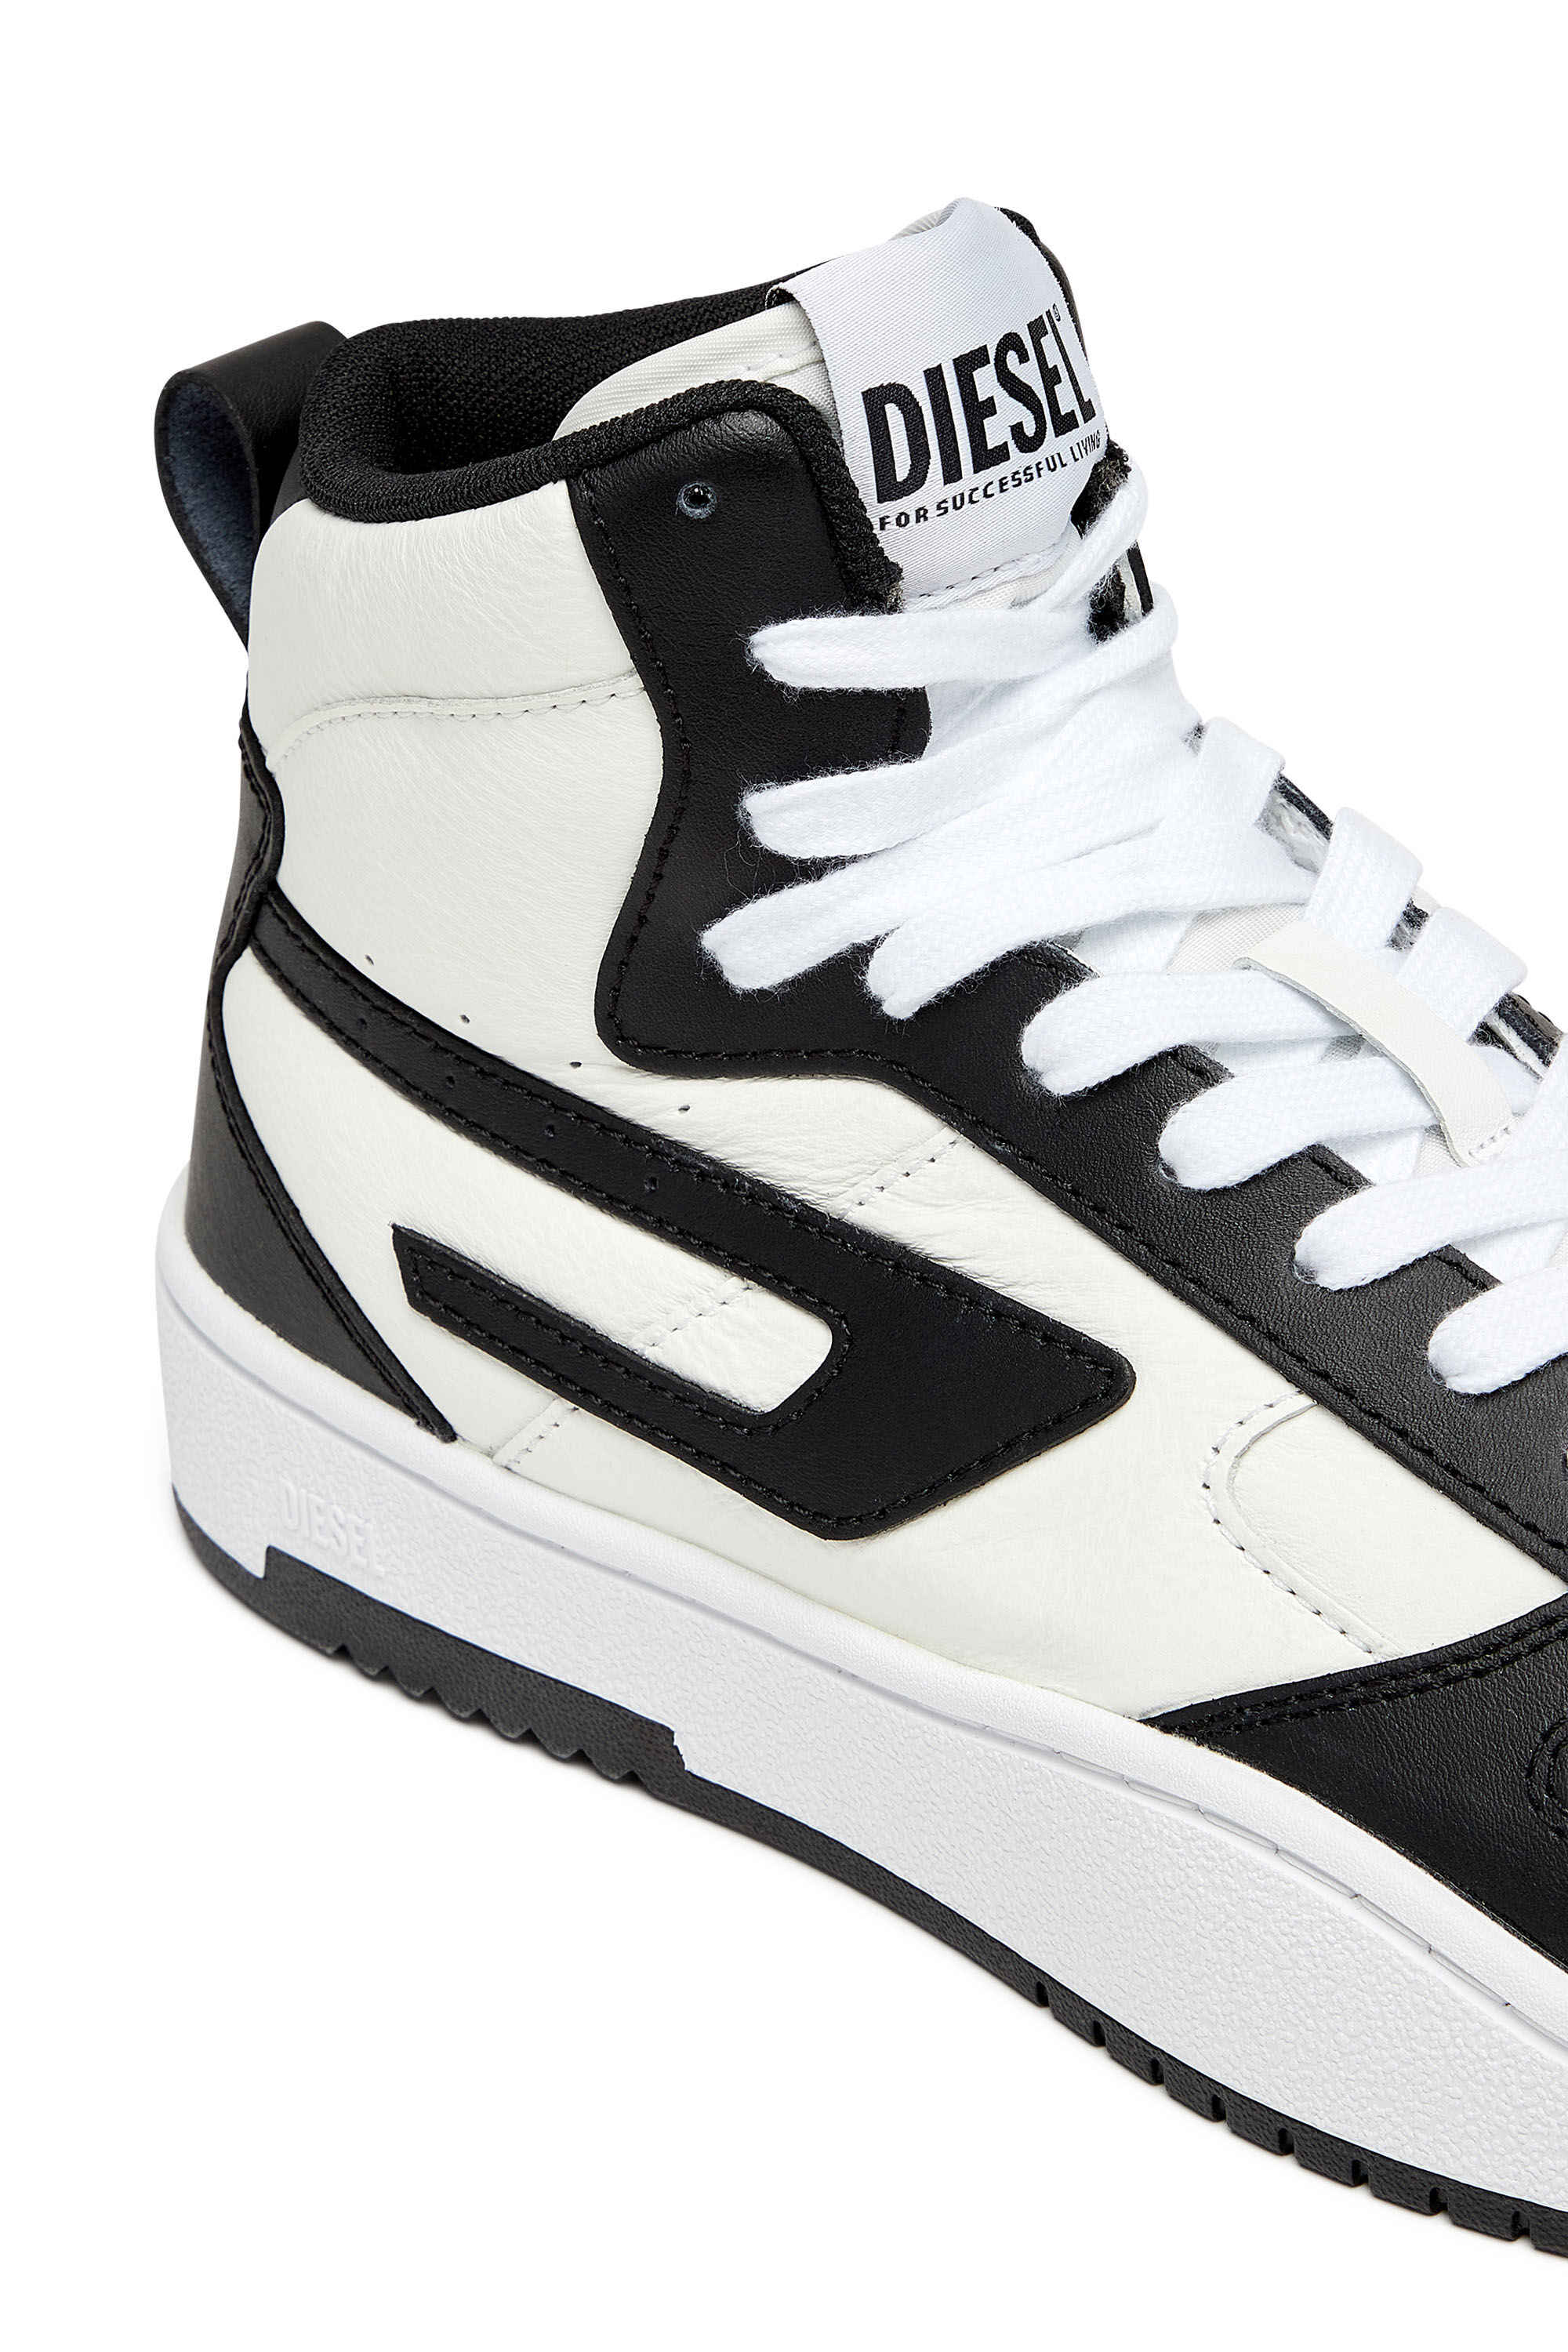 Diesel - S-UKIYO V2 MID, Man S-Ukiyo V2 Mid - High-top sneakers with D branding in Multicolor - Image 6